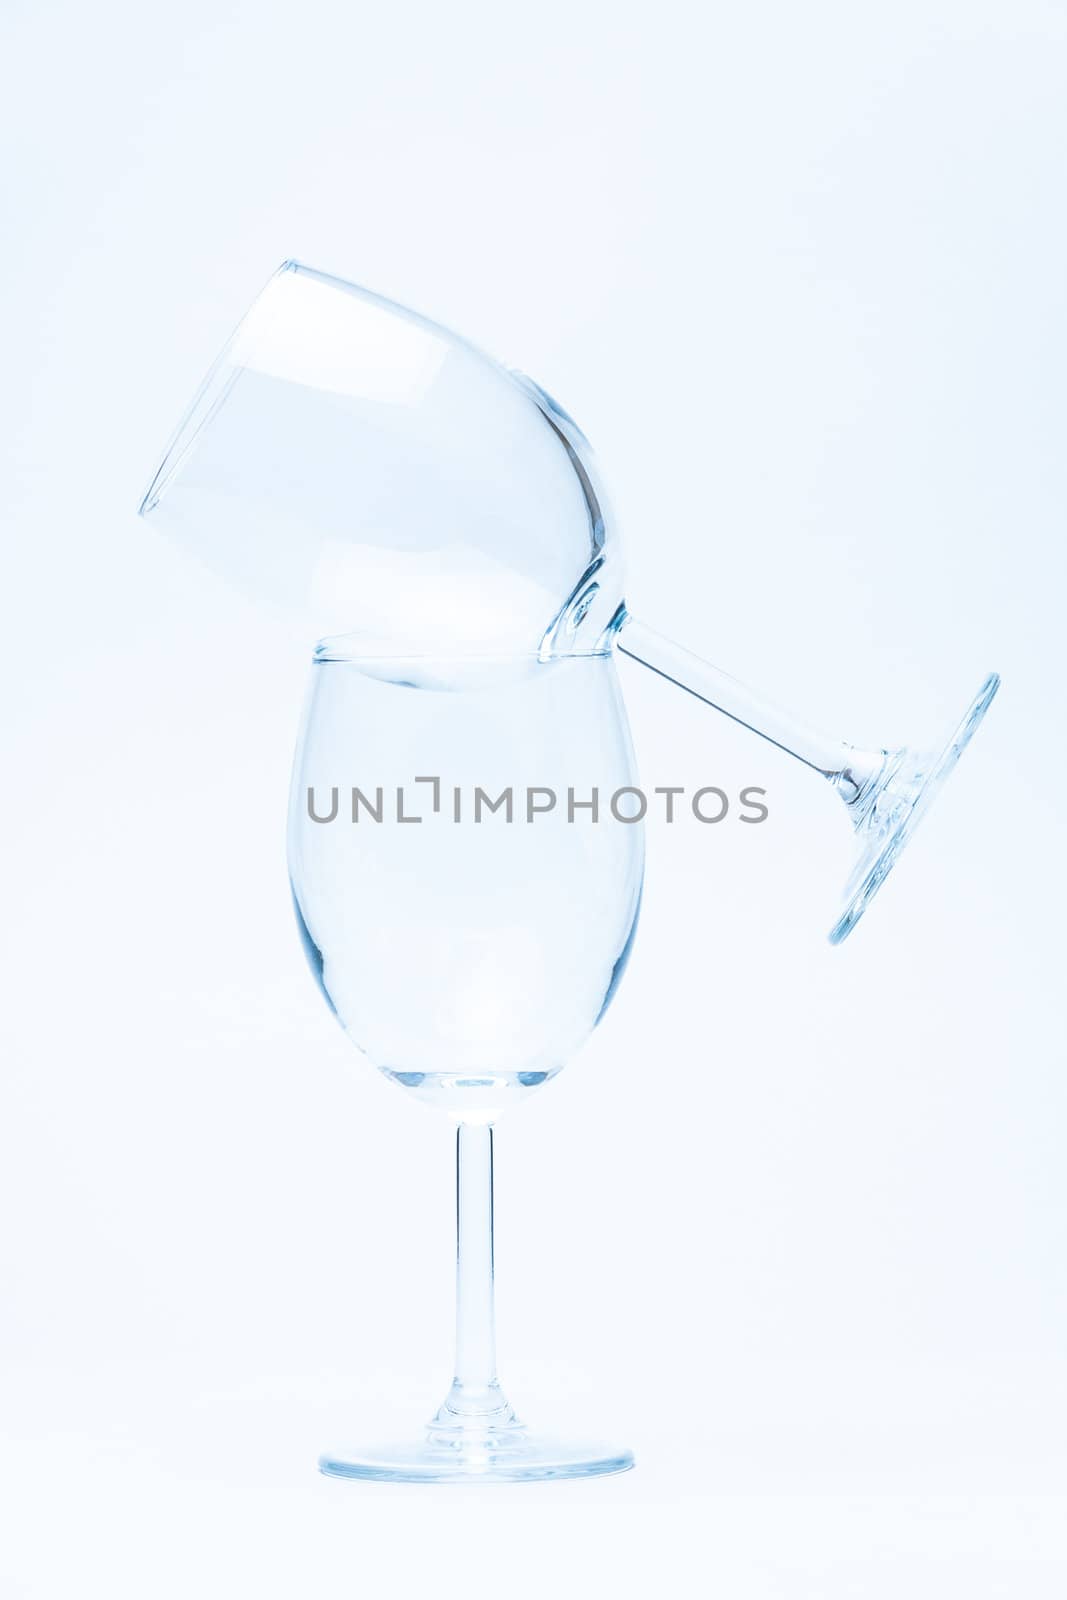 empty wine glass standing on a wineglass by vitmihailov